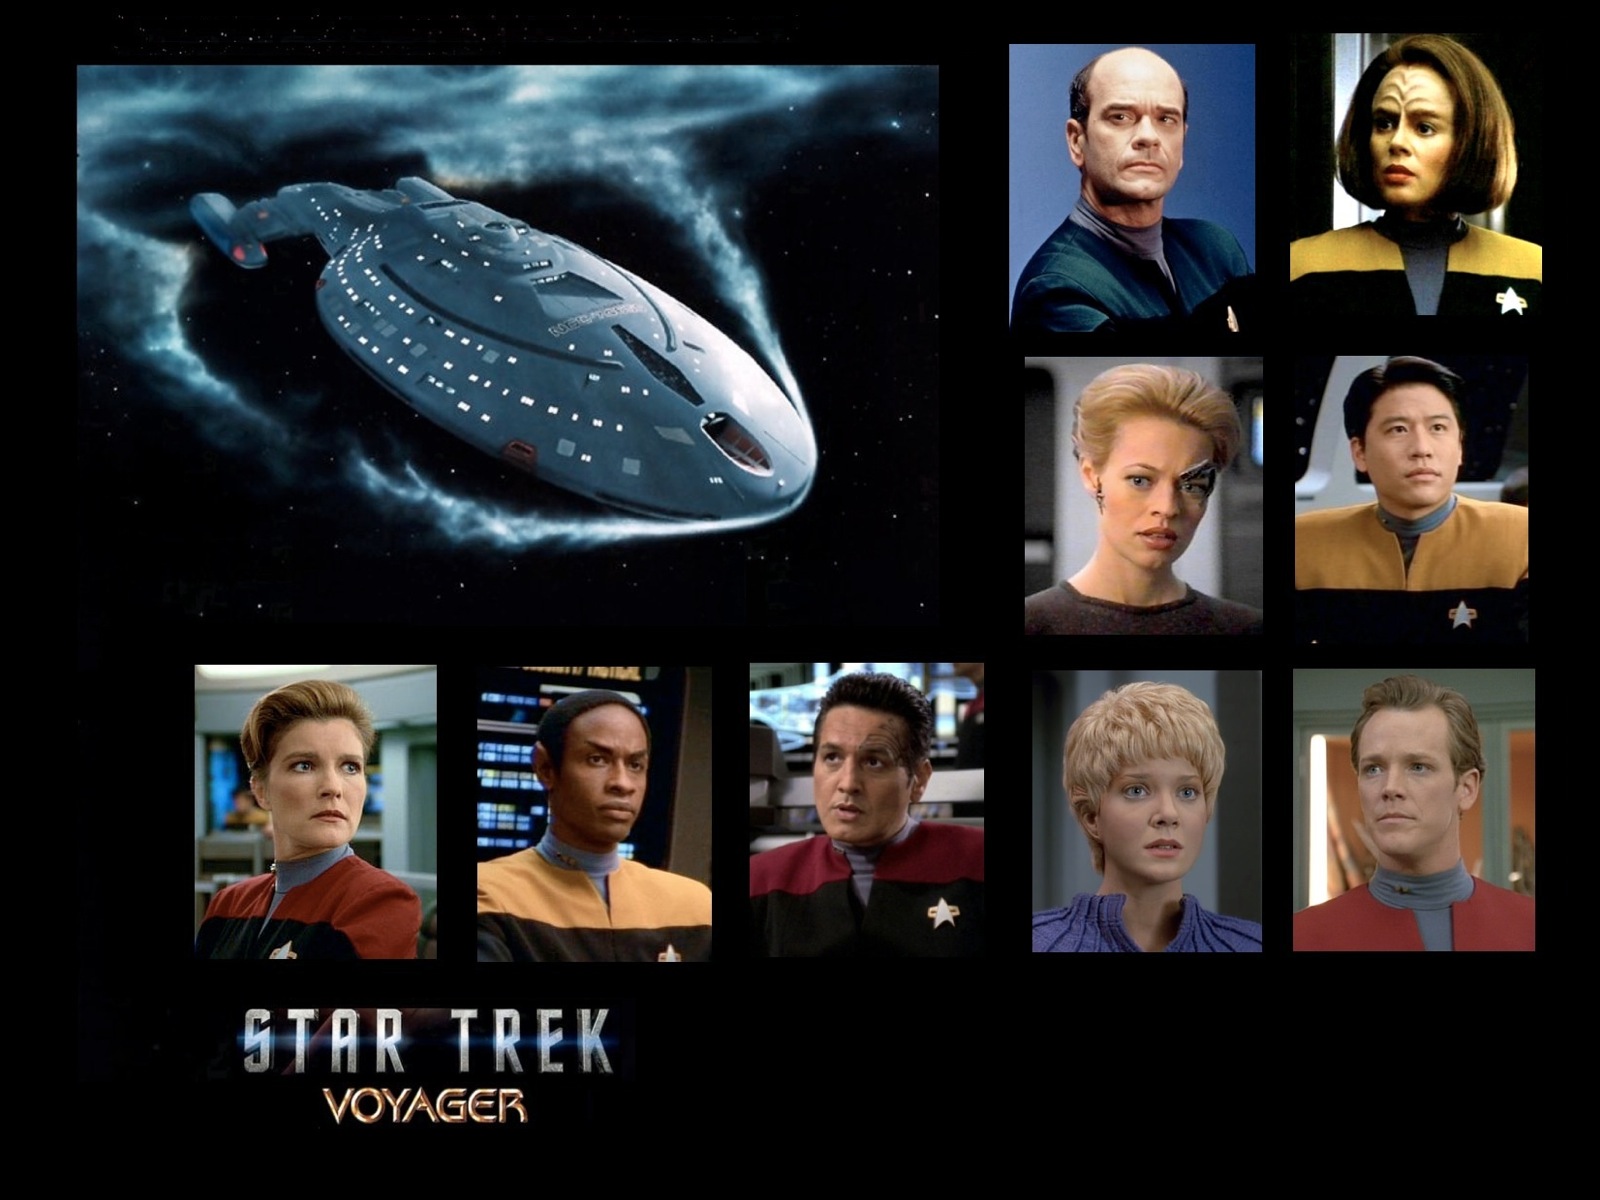 Voyager cast wallpaper Trek Voyager Wallpaper